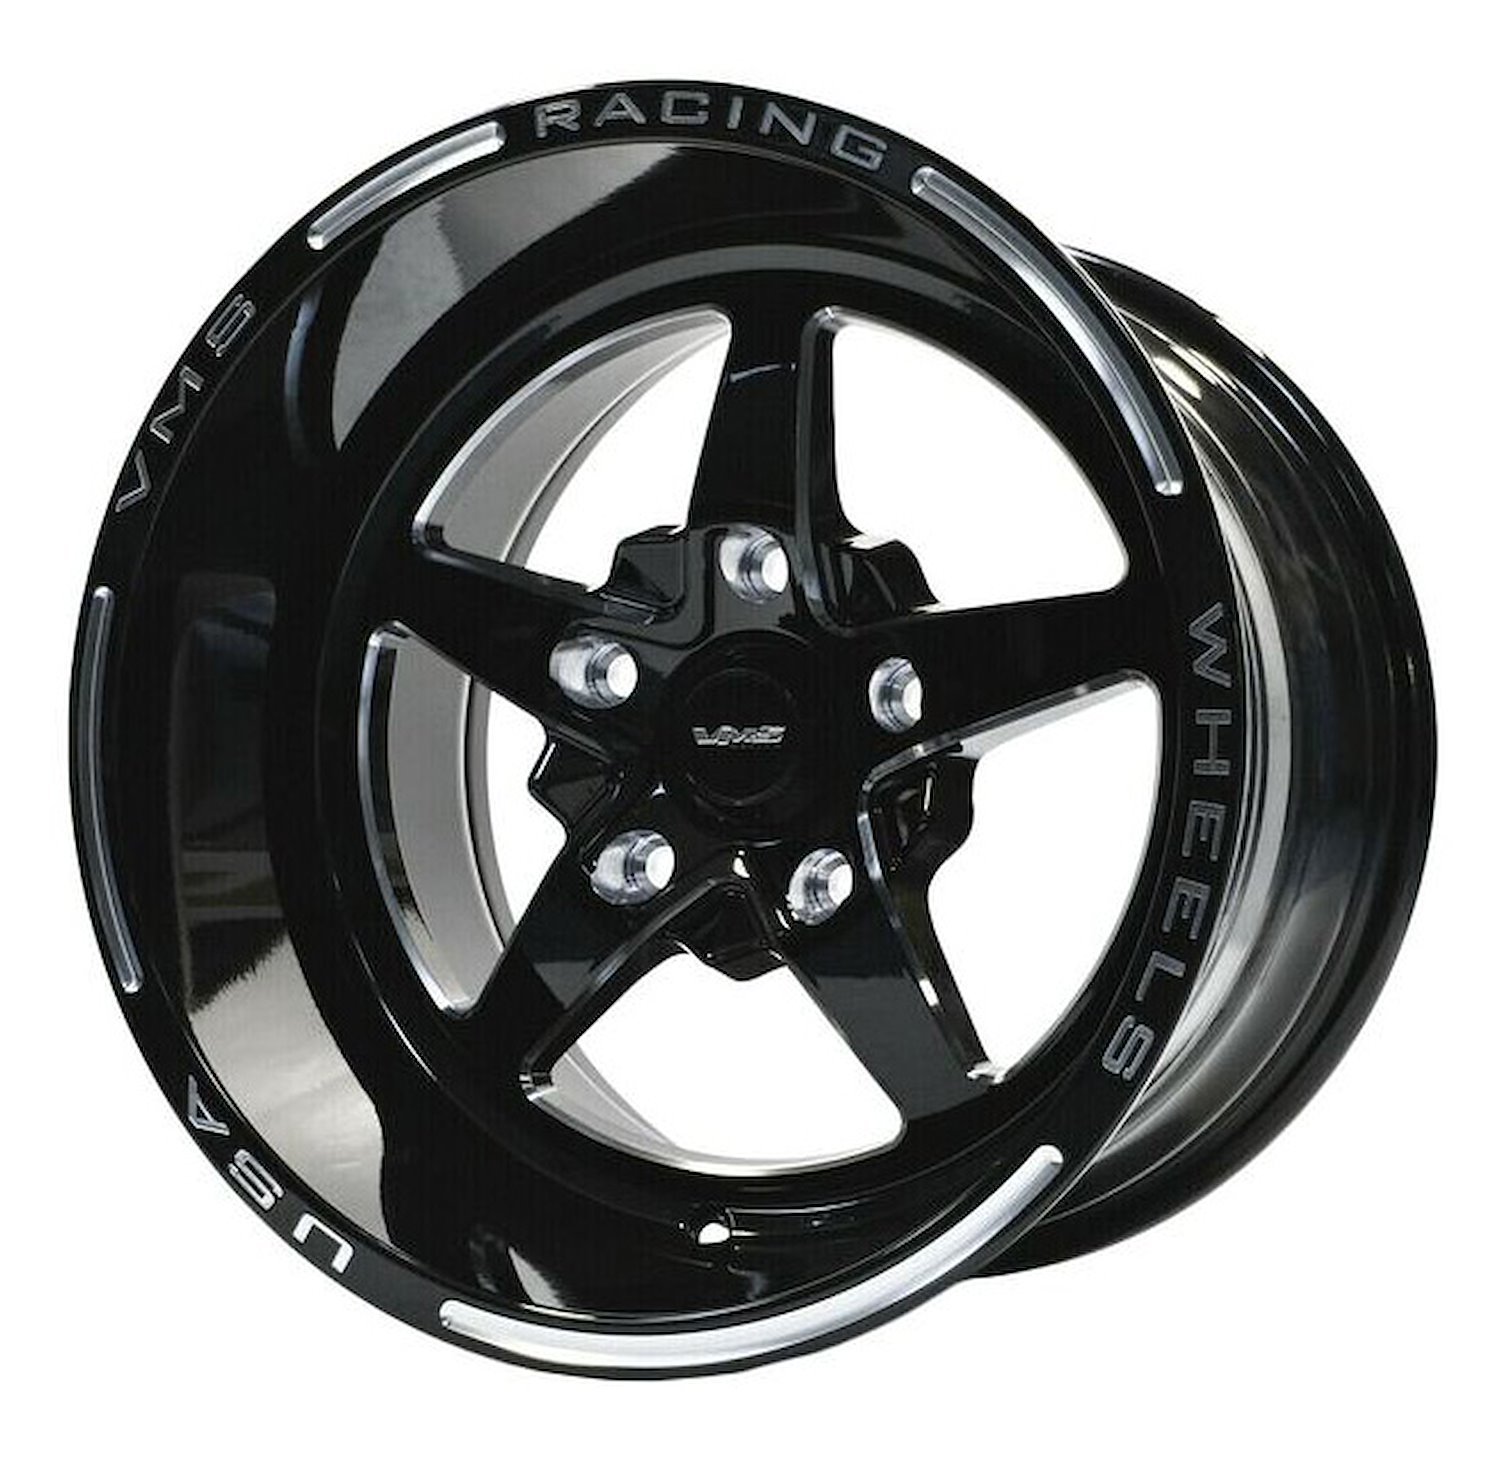 VWST057 V-Star Wheel, Size: 15" x 10", Bolt Pattern: 5 x 115 mm [Finish: Gloss Black Milled]